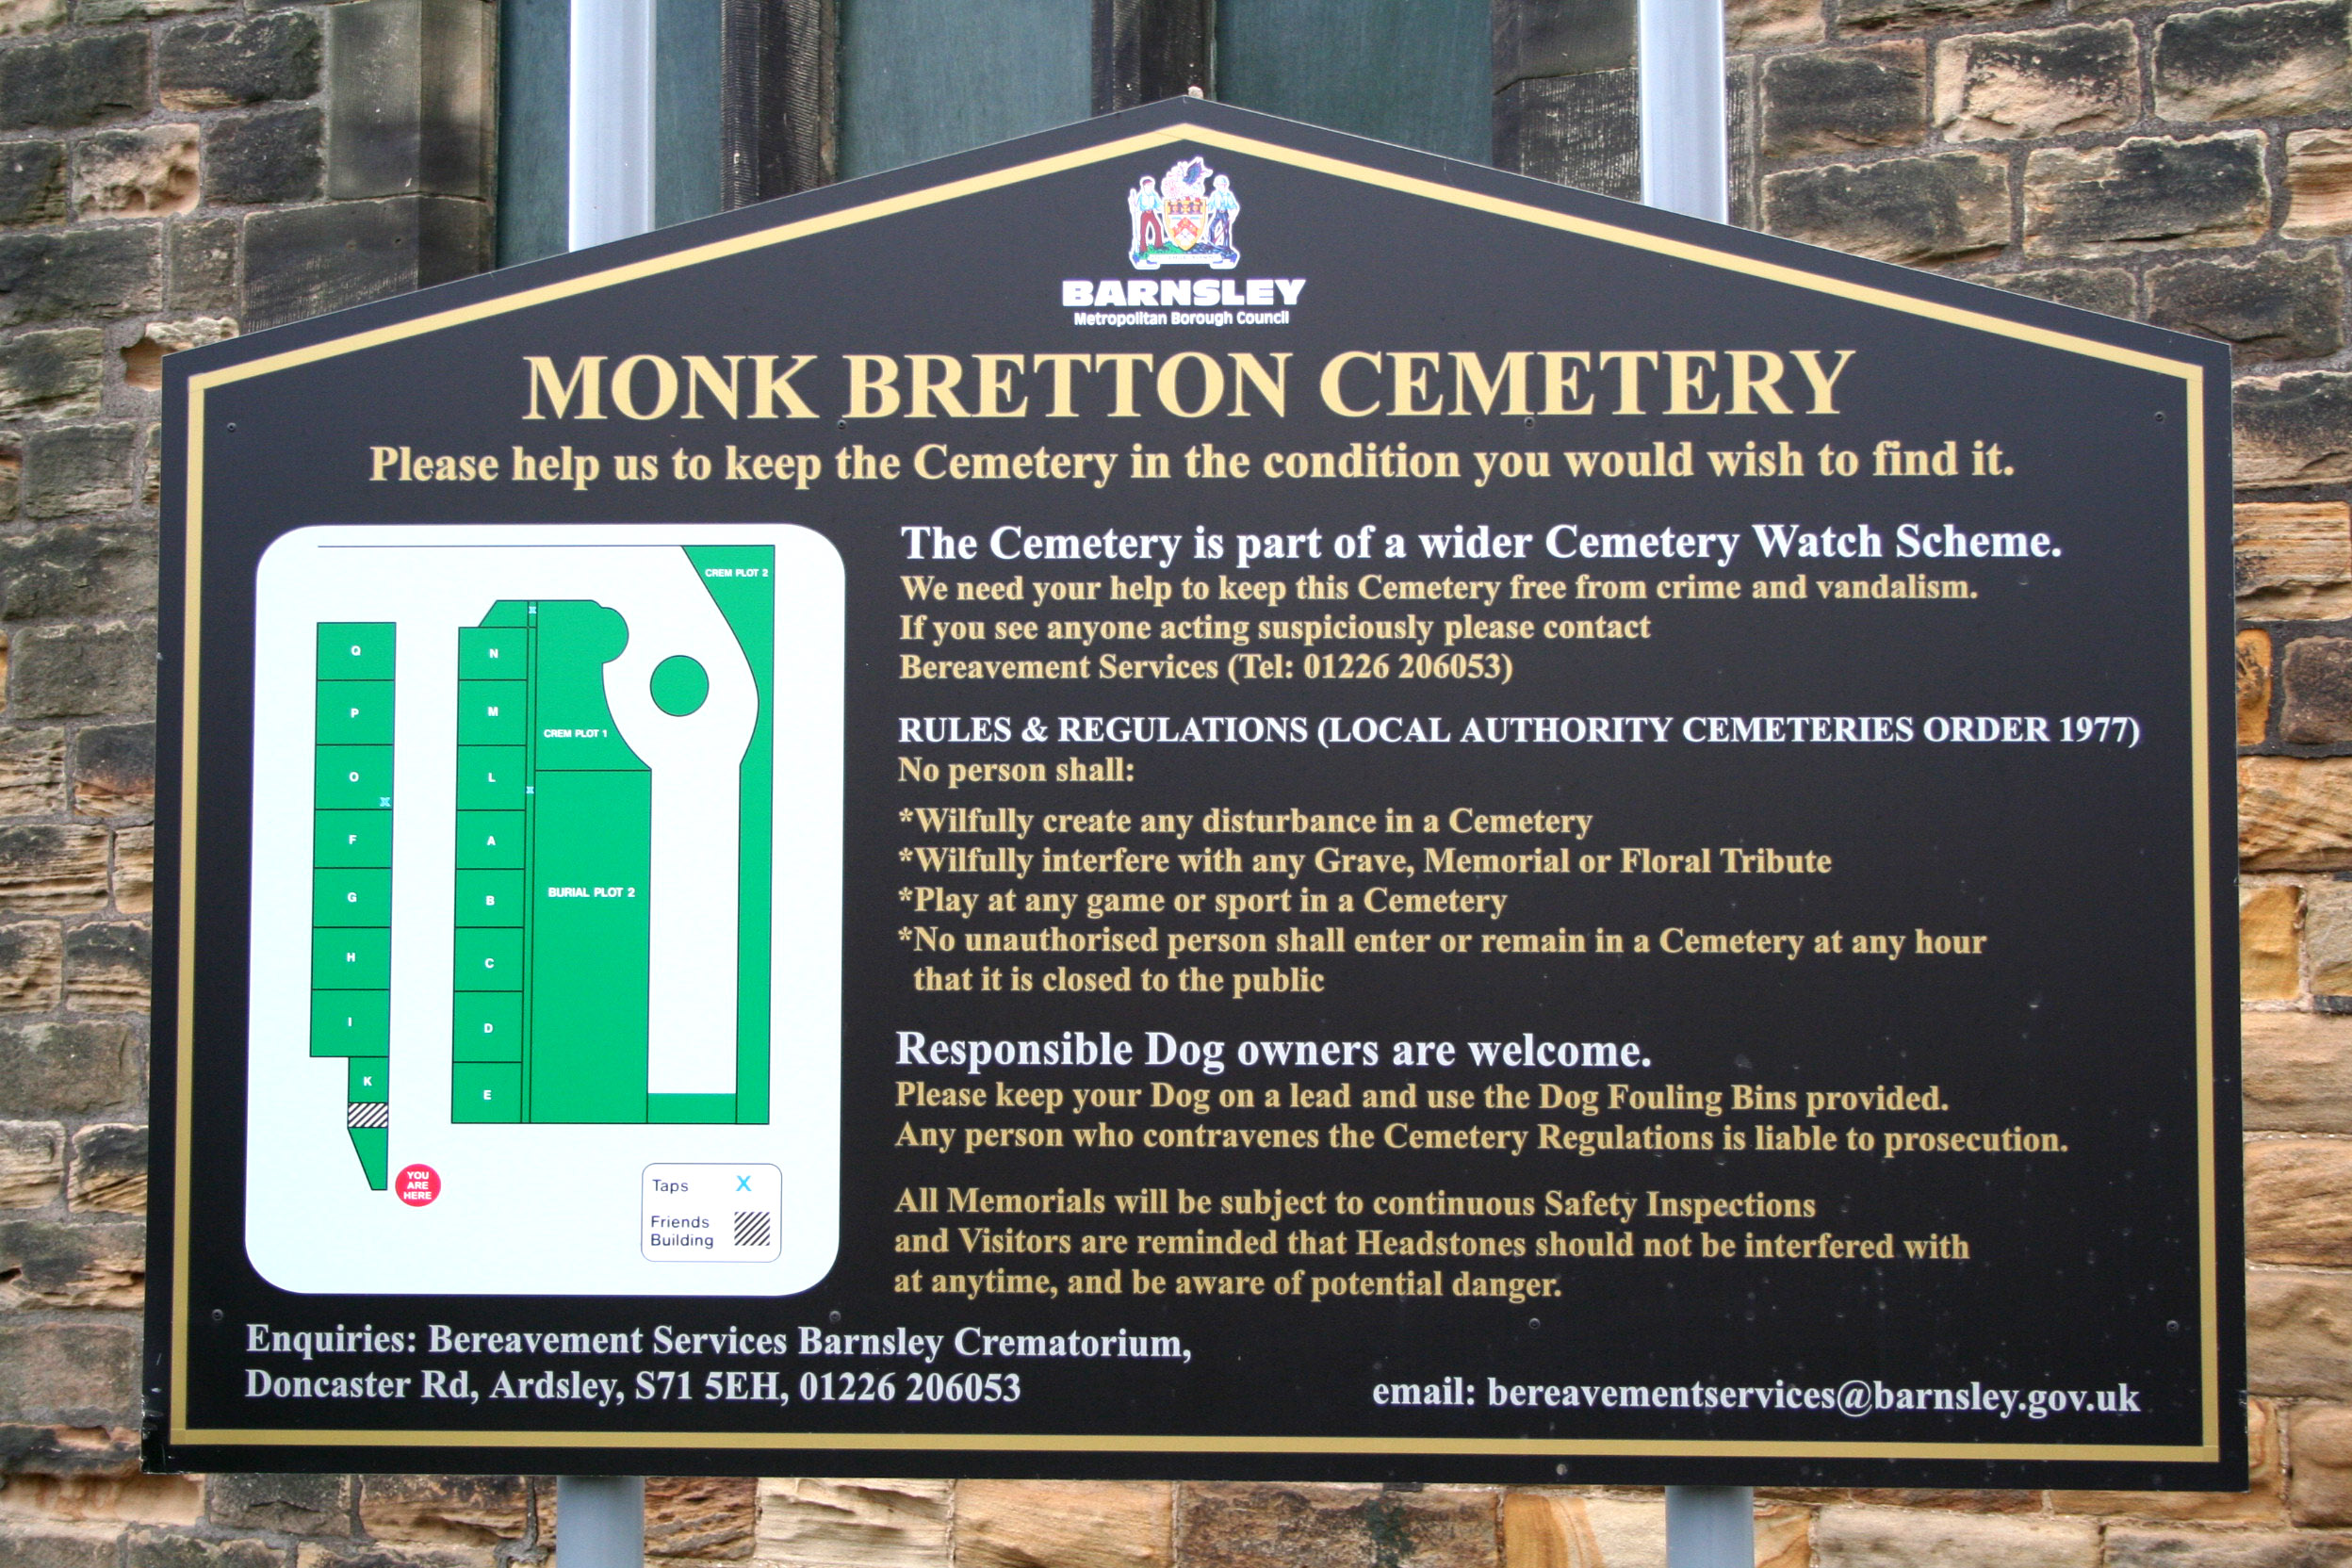 Monk Bretton Cemetery